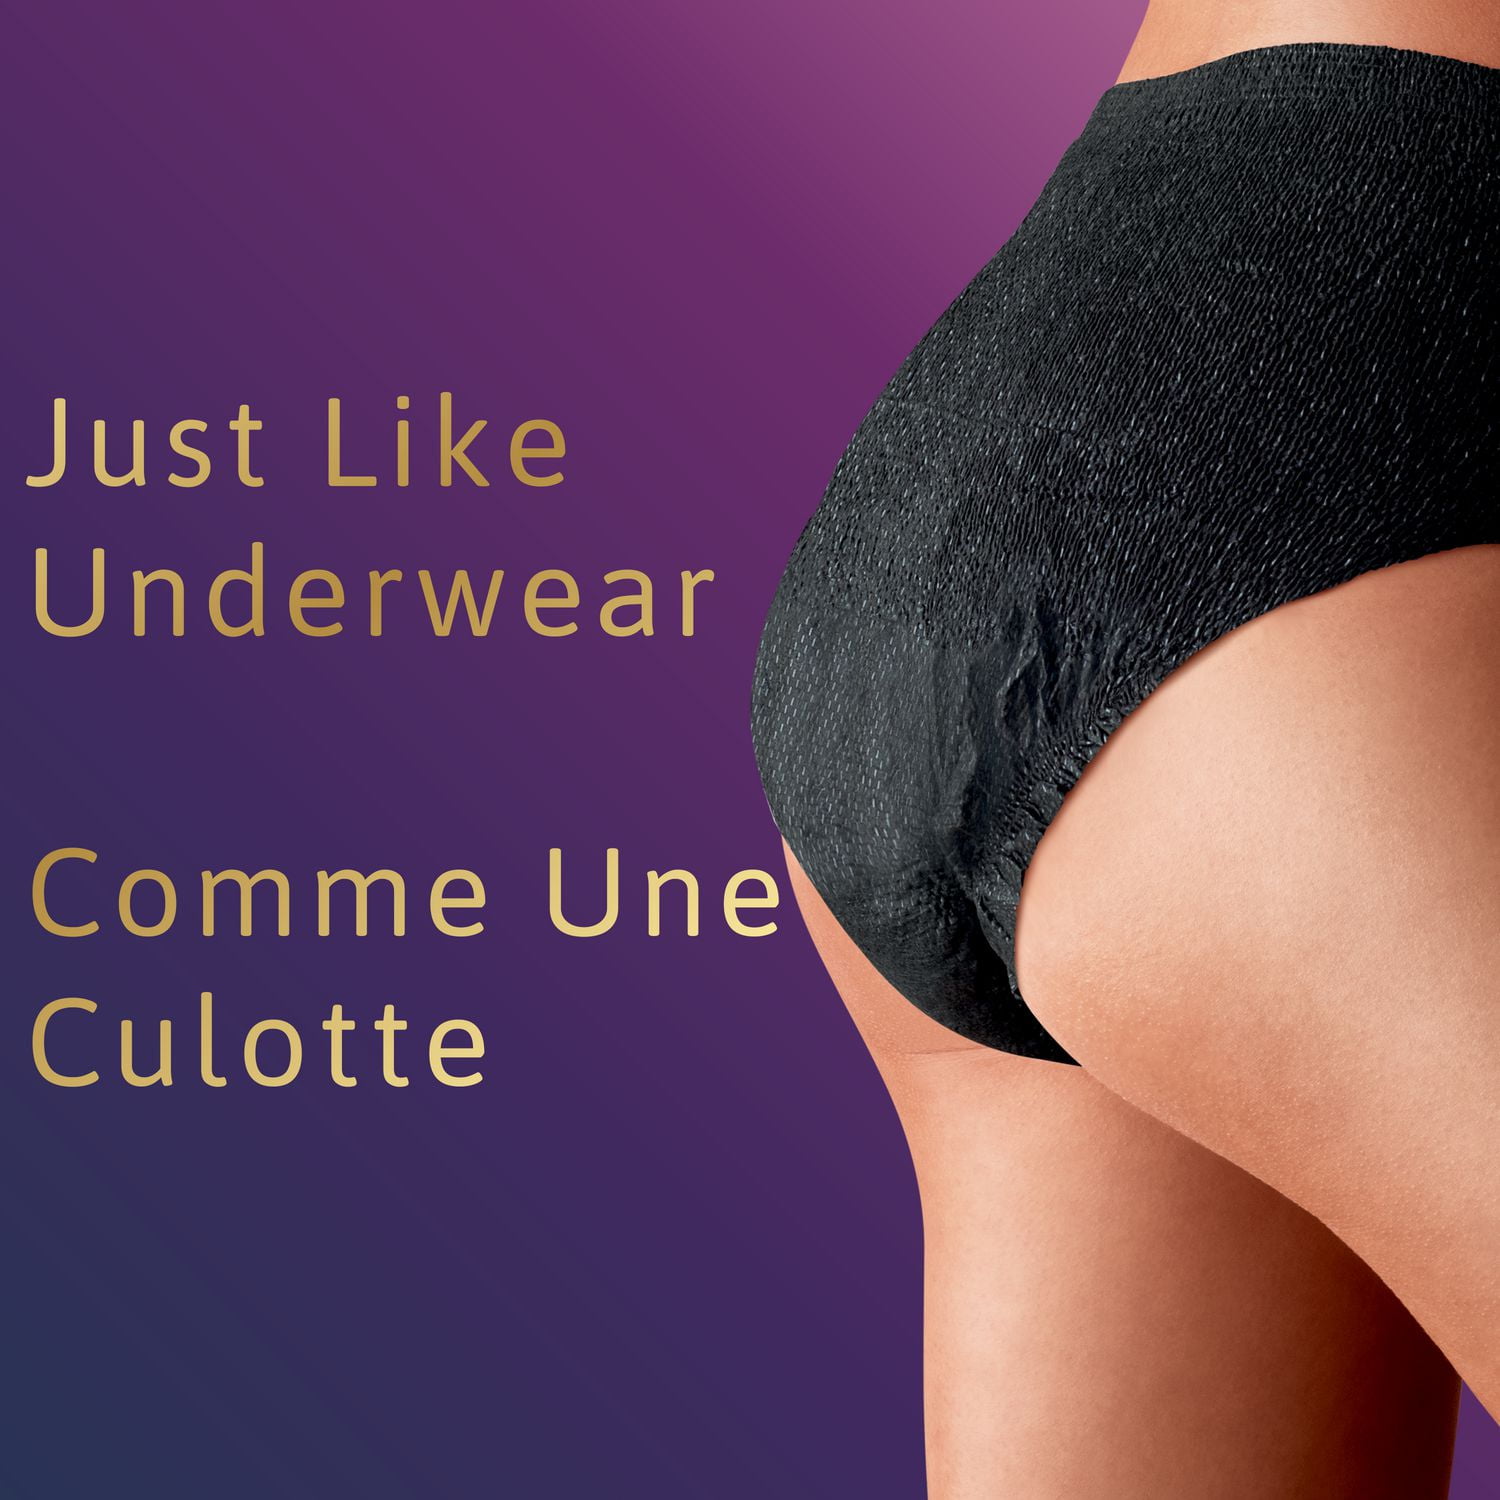 Tena Stylish Designs Incontinence Underwear for Women, Maximum S/M/L/XL ✓